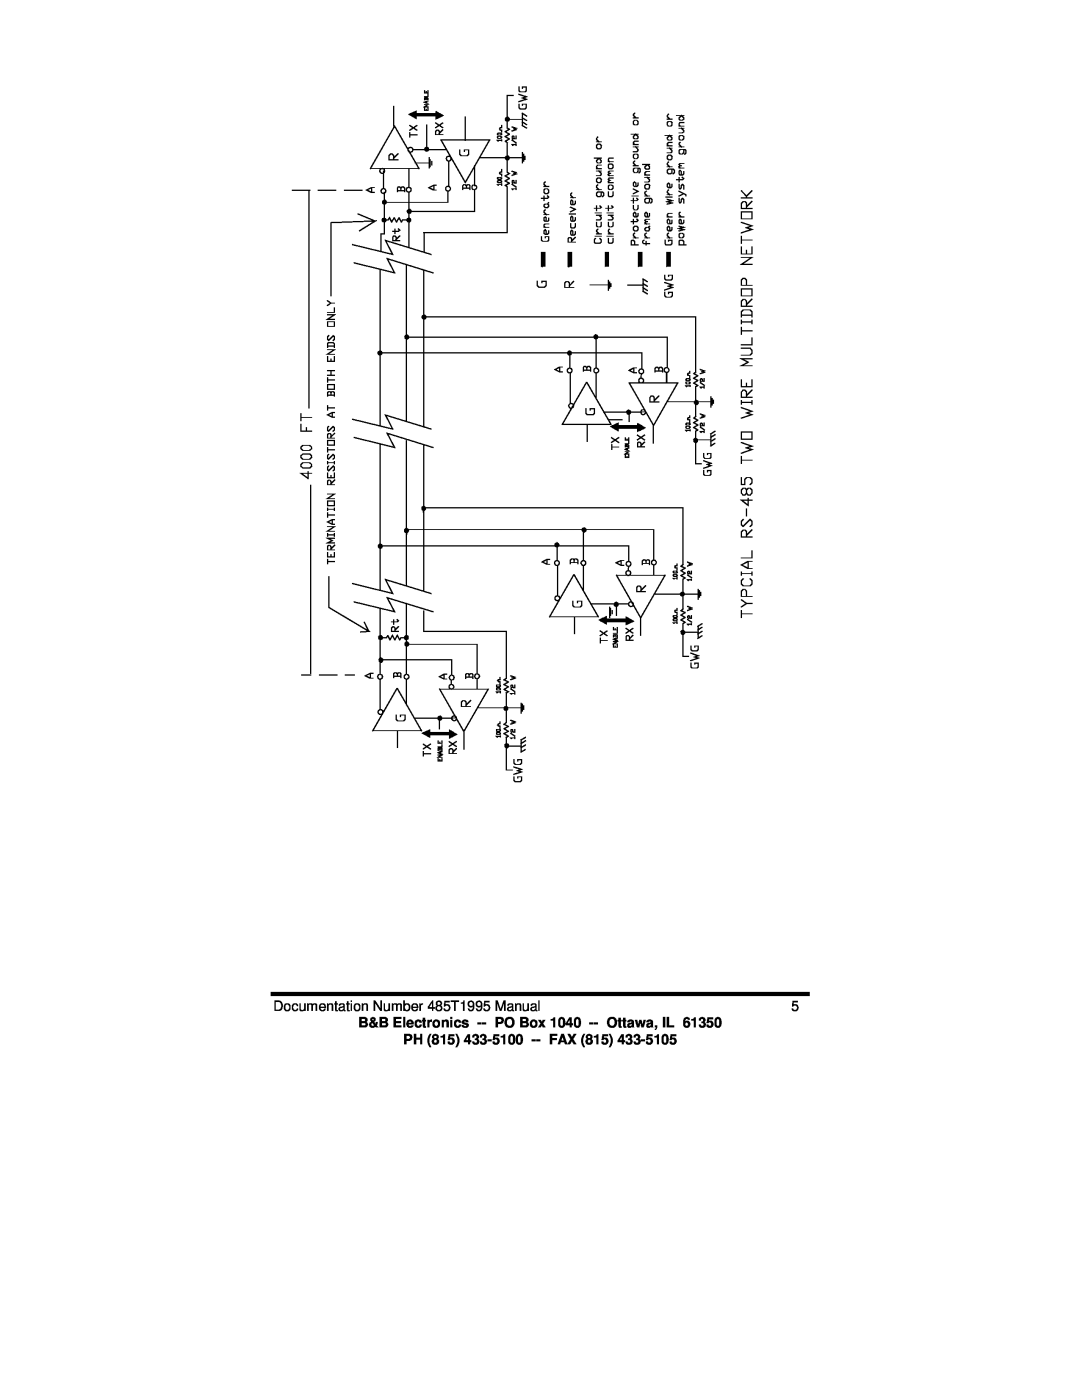 B&B Electronics Documentation Number 485T1995 Manual, B&B Electronics -- PO Box 1040 -- Ottawa, IL, PH 815, FAX 815 